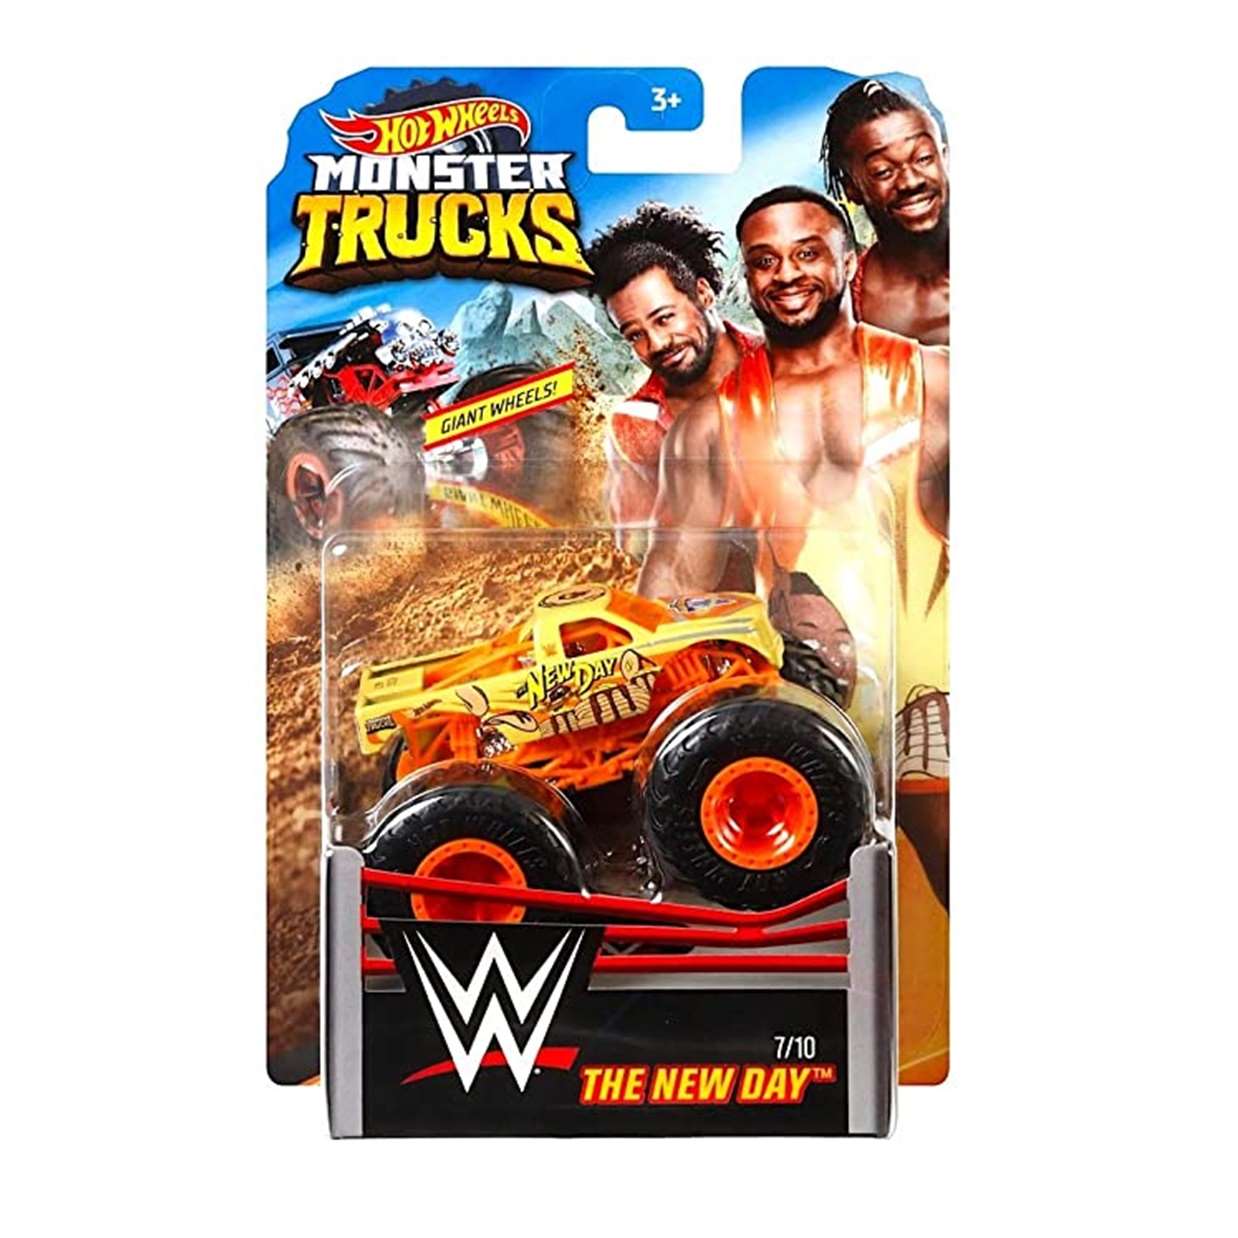 The New Day Pickup Wwe 7/10 Hot Wheels Monster Trucks